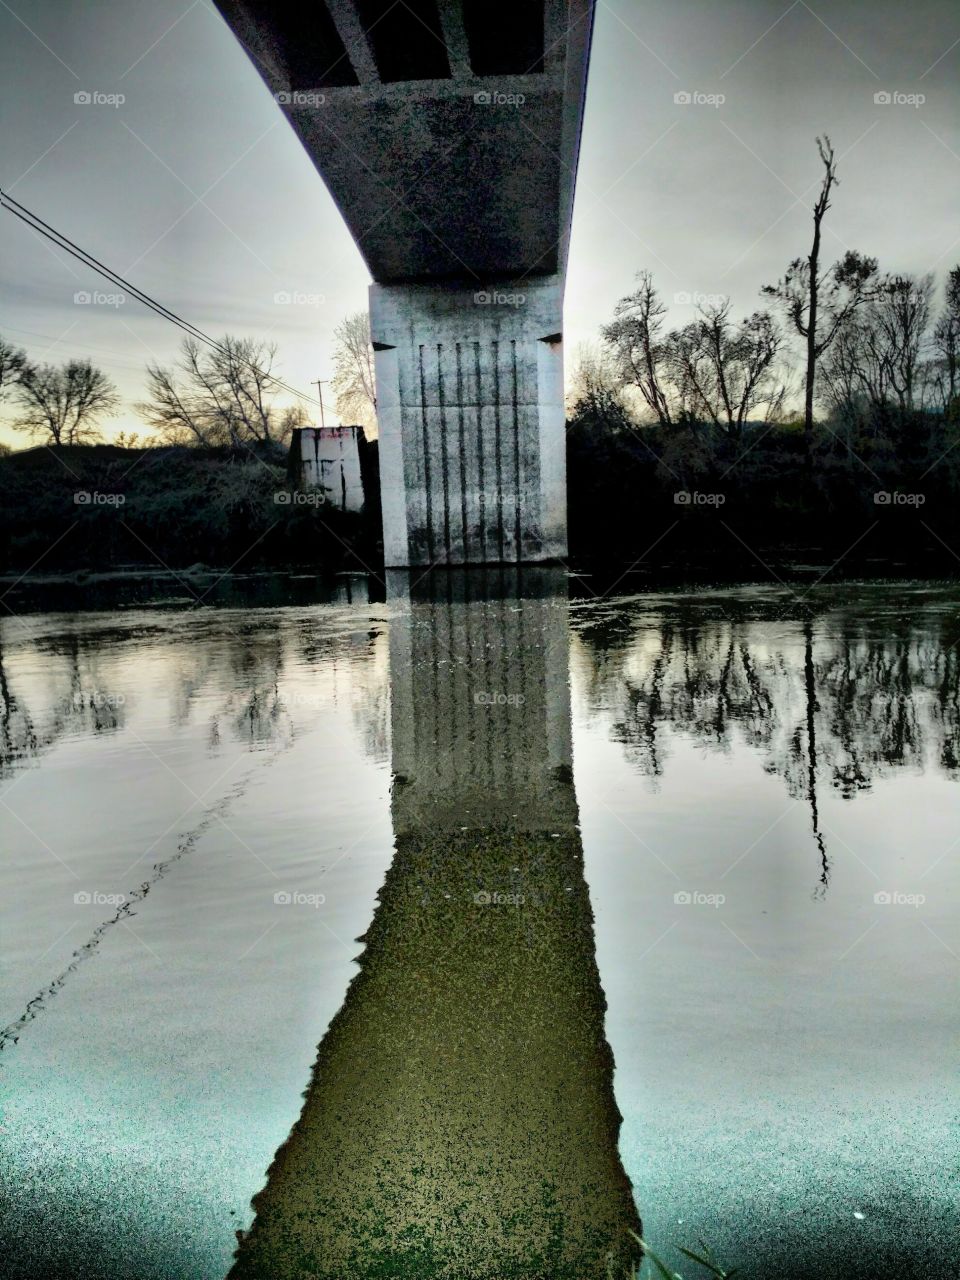 Under a bridge